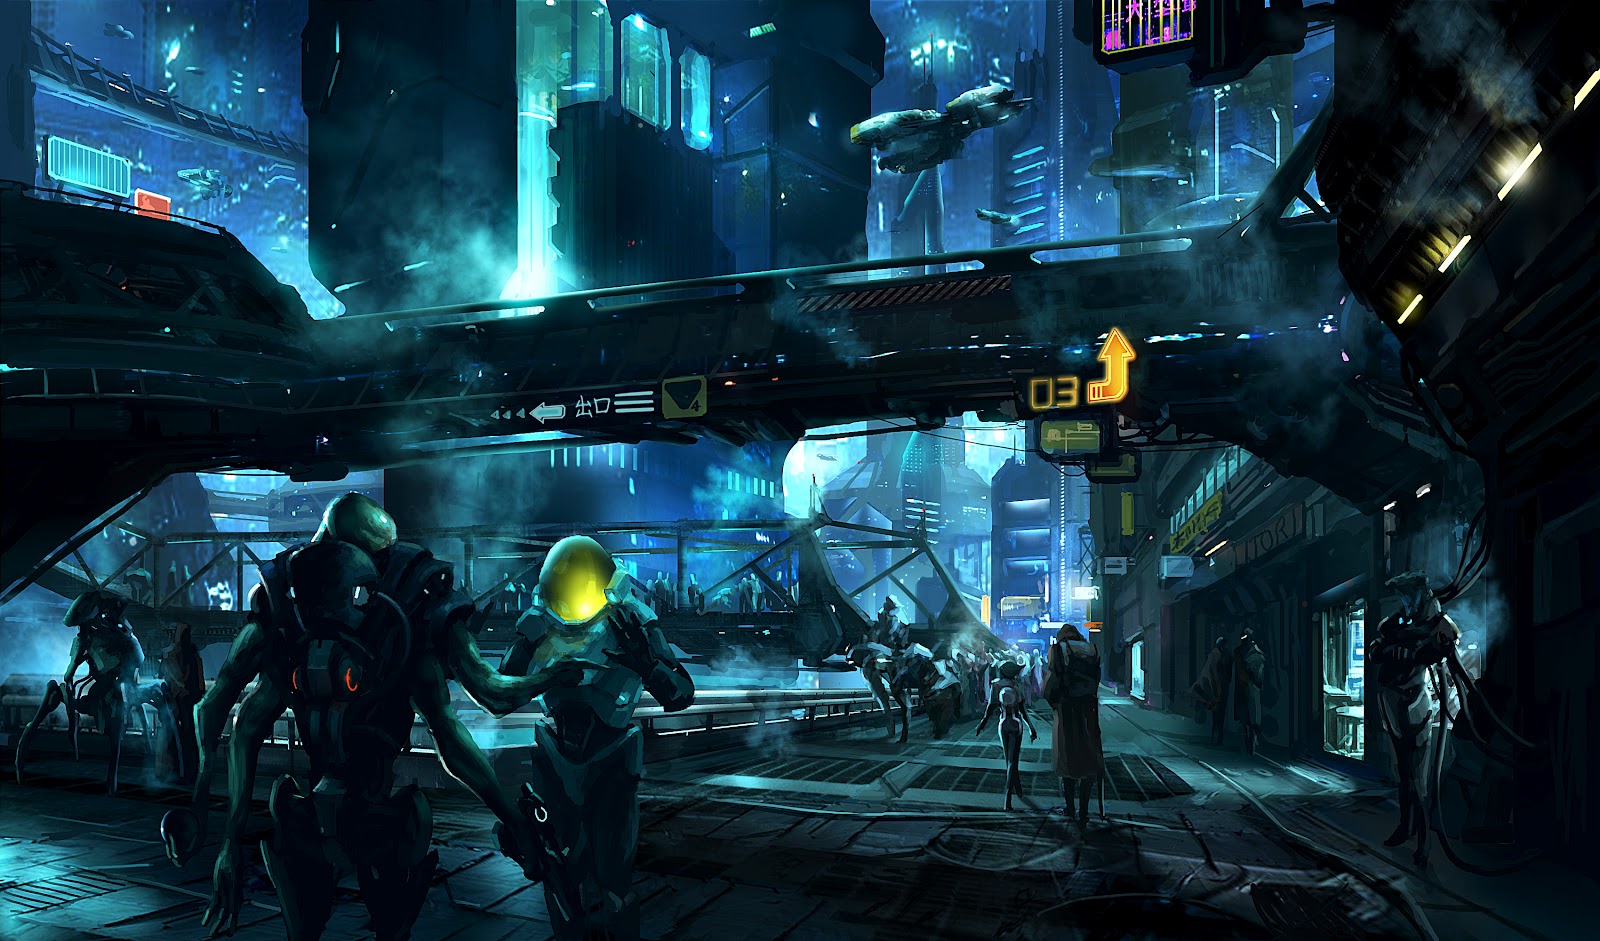 Sci fi gaming. Sci-Fi Art город киберпанк. Cyberpunk Concept Art город. Sci Fi Cyberpunk улица арт. Киберпанк концепт арт окружения.